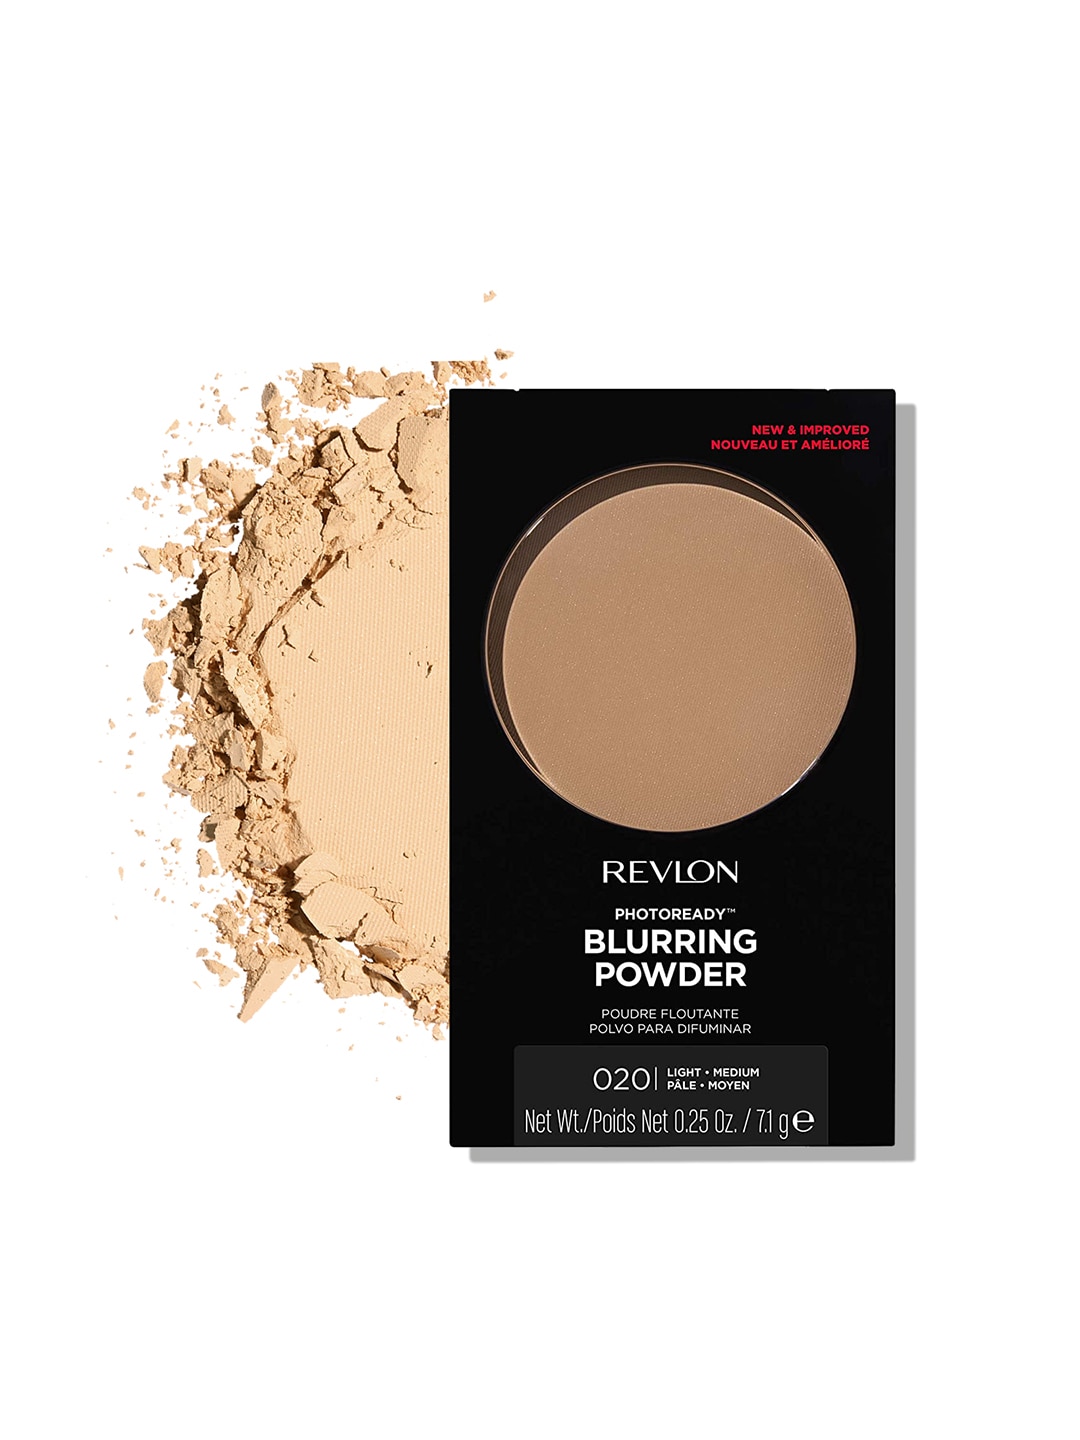 Revlon Photoready Blurring Powder - Light/Medium 020 Price in India